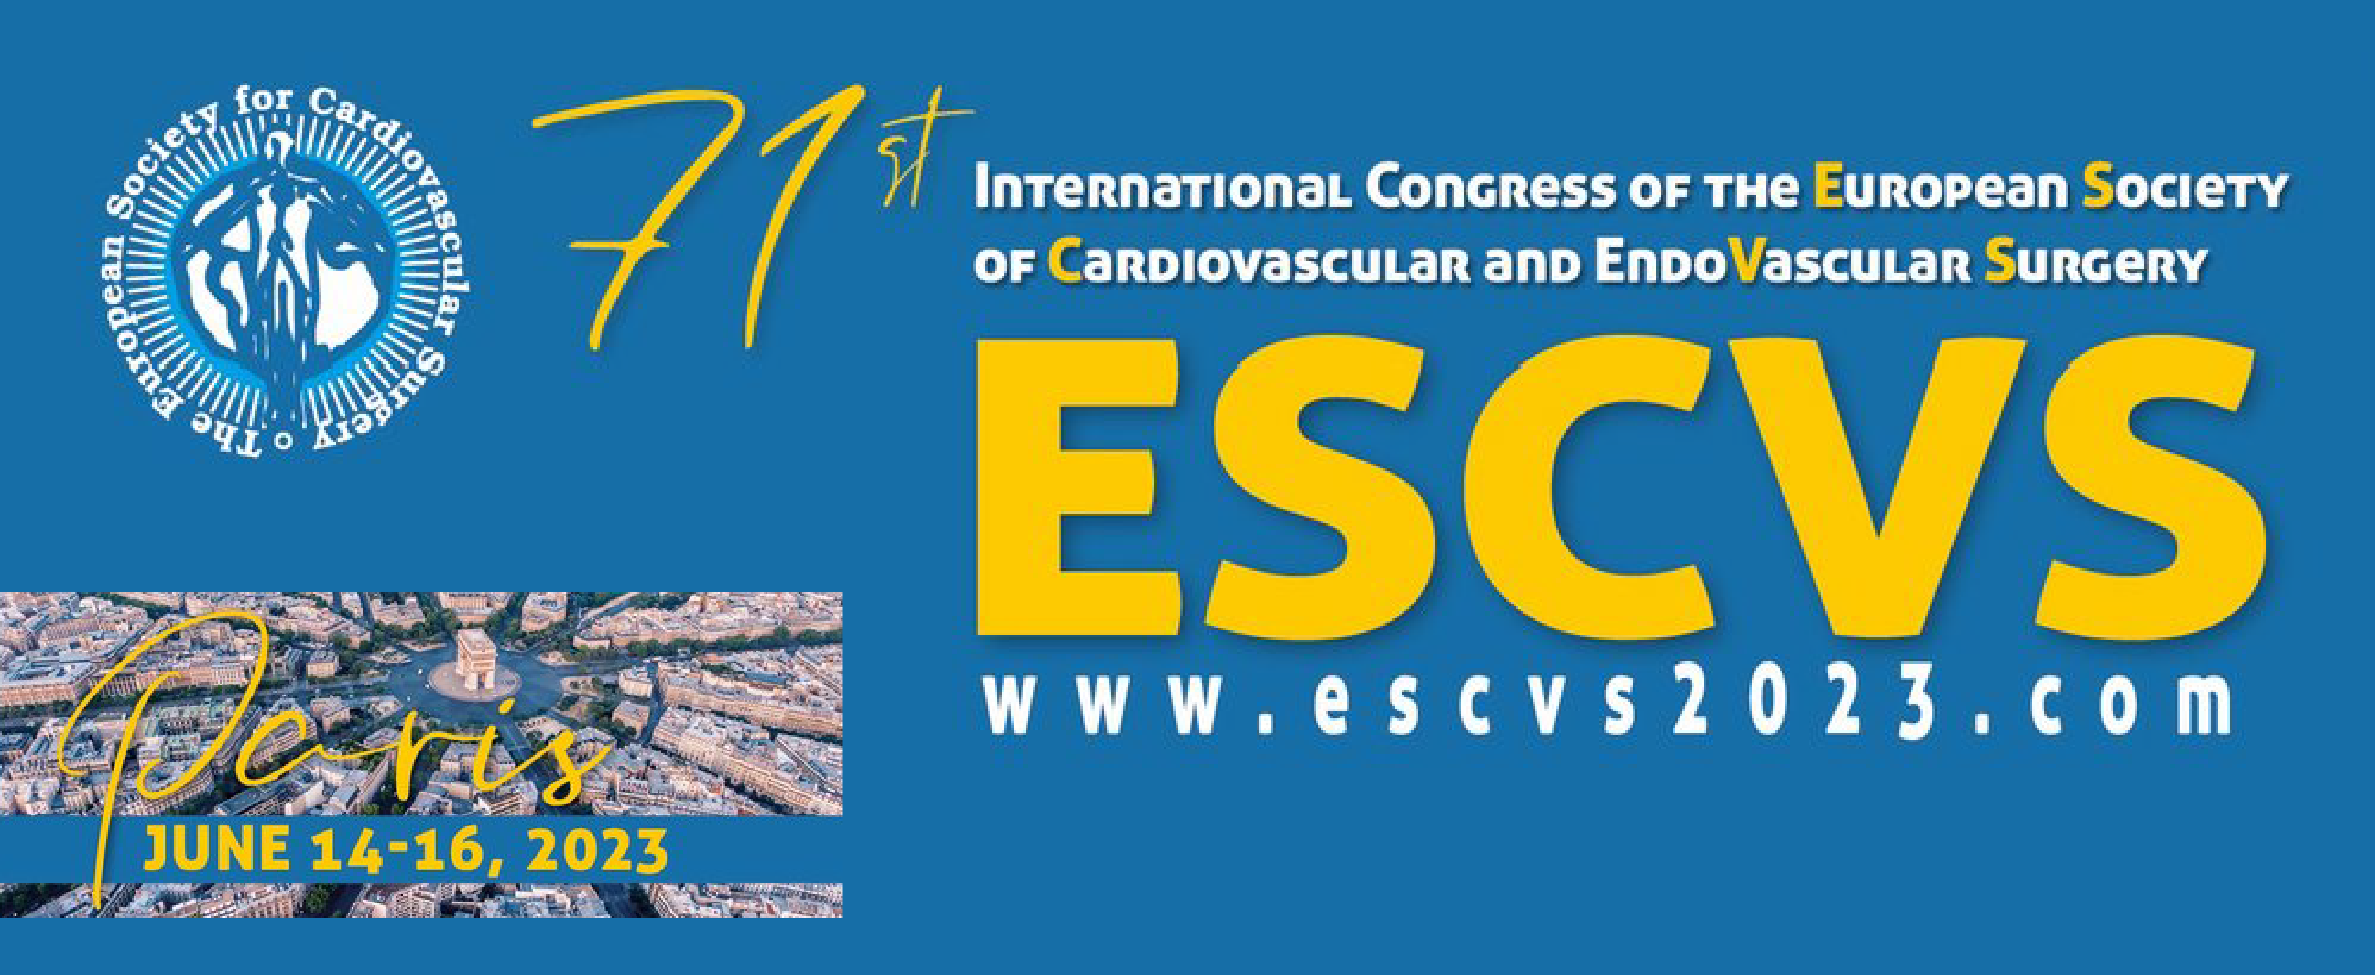 71st International congress of the European Society of Cardiovascular and Endovascular Surgery - ESCVS 2023